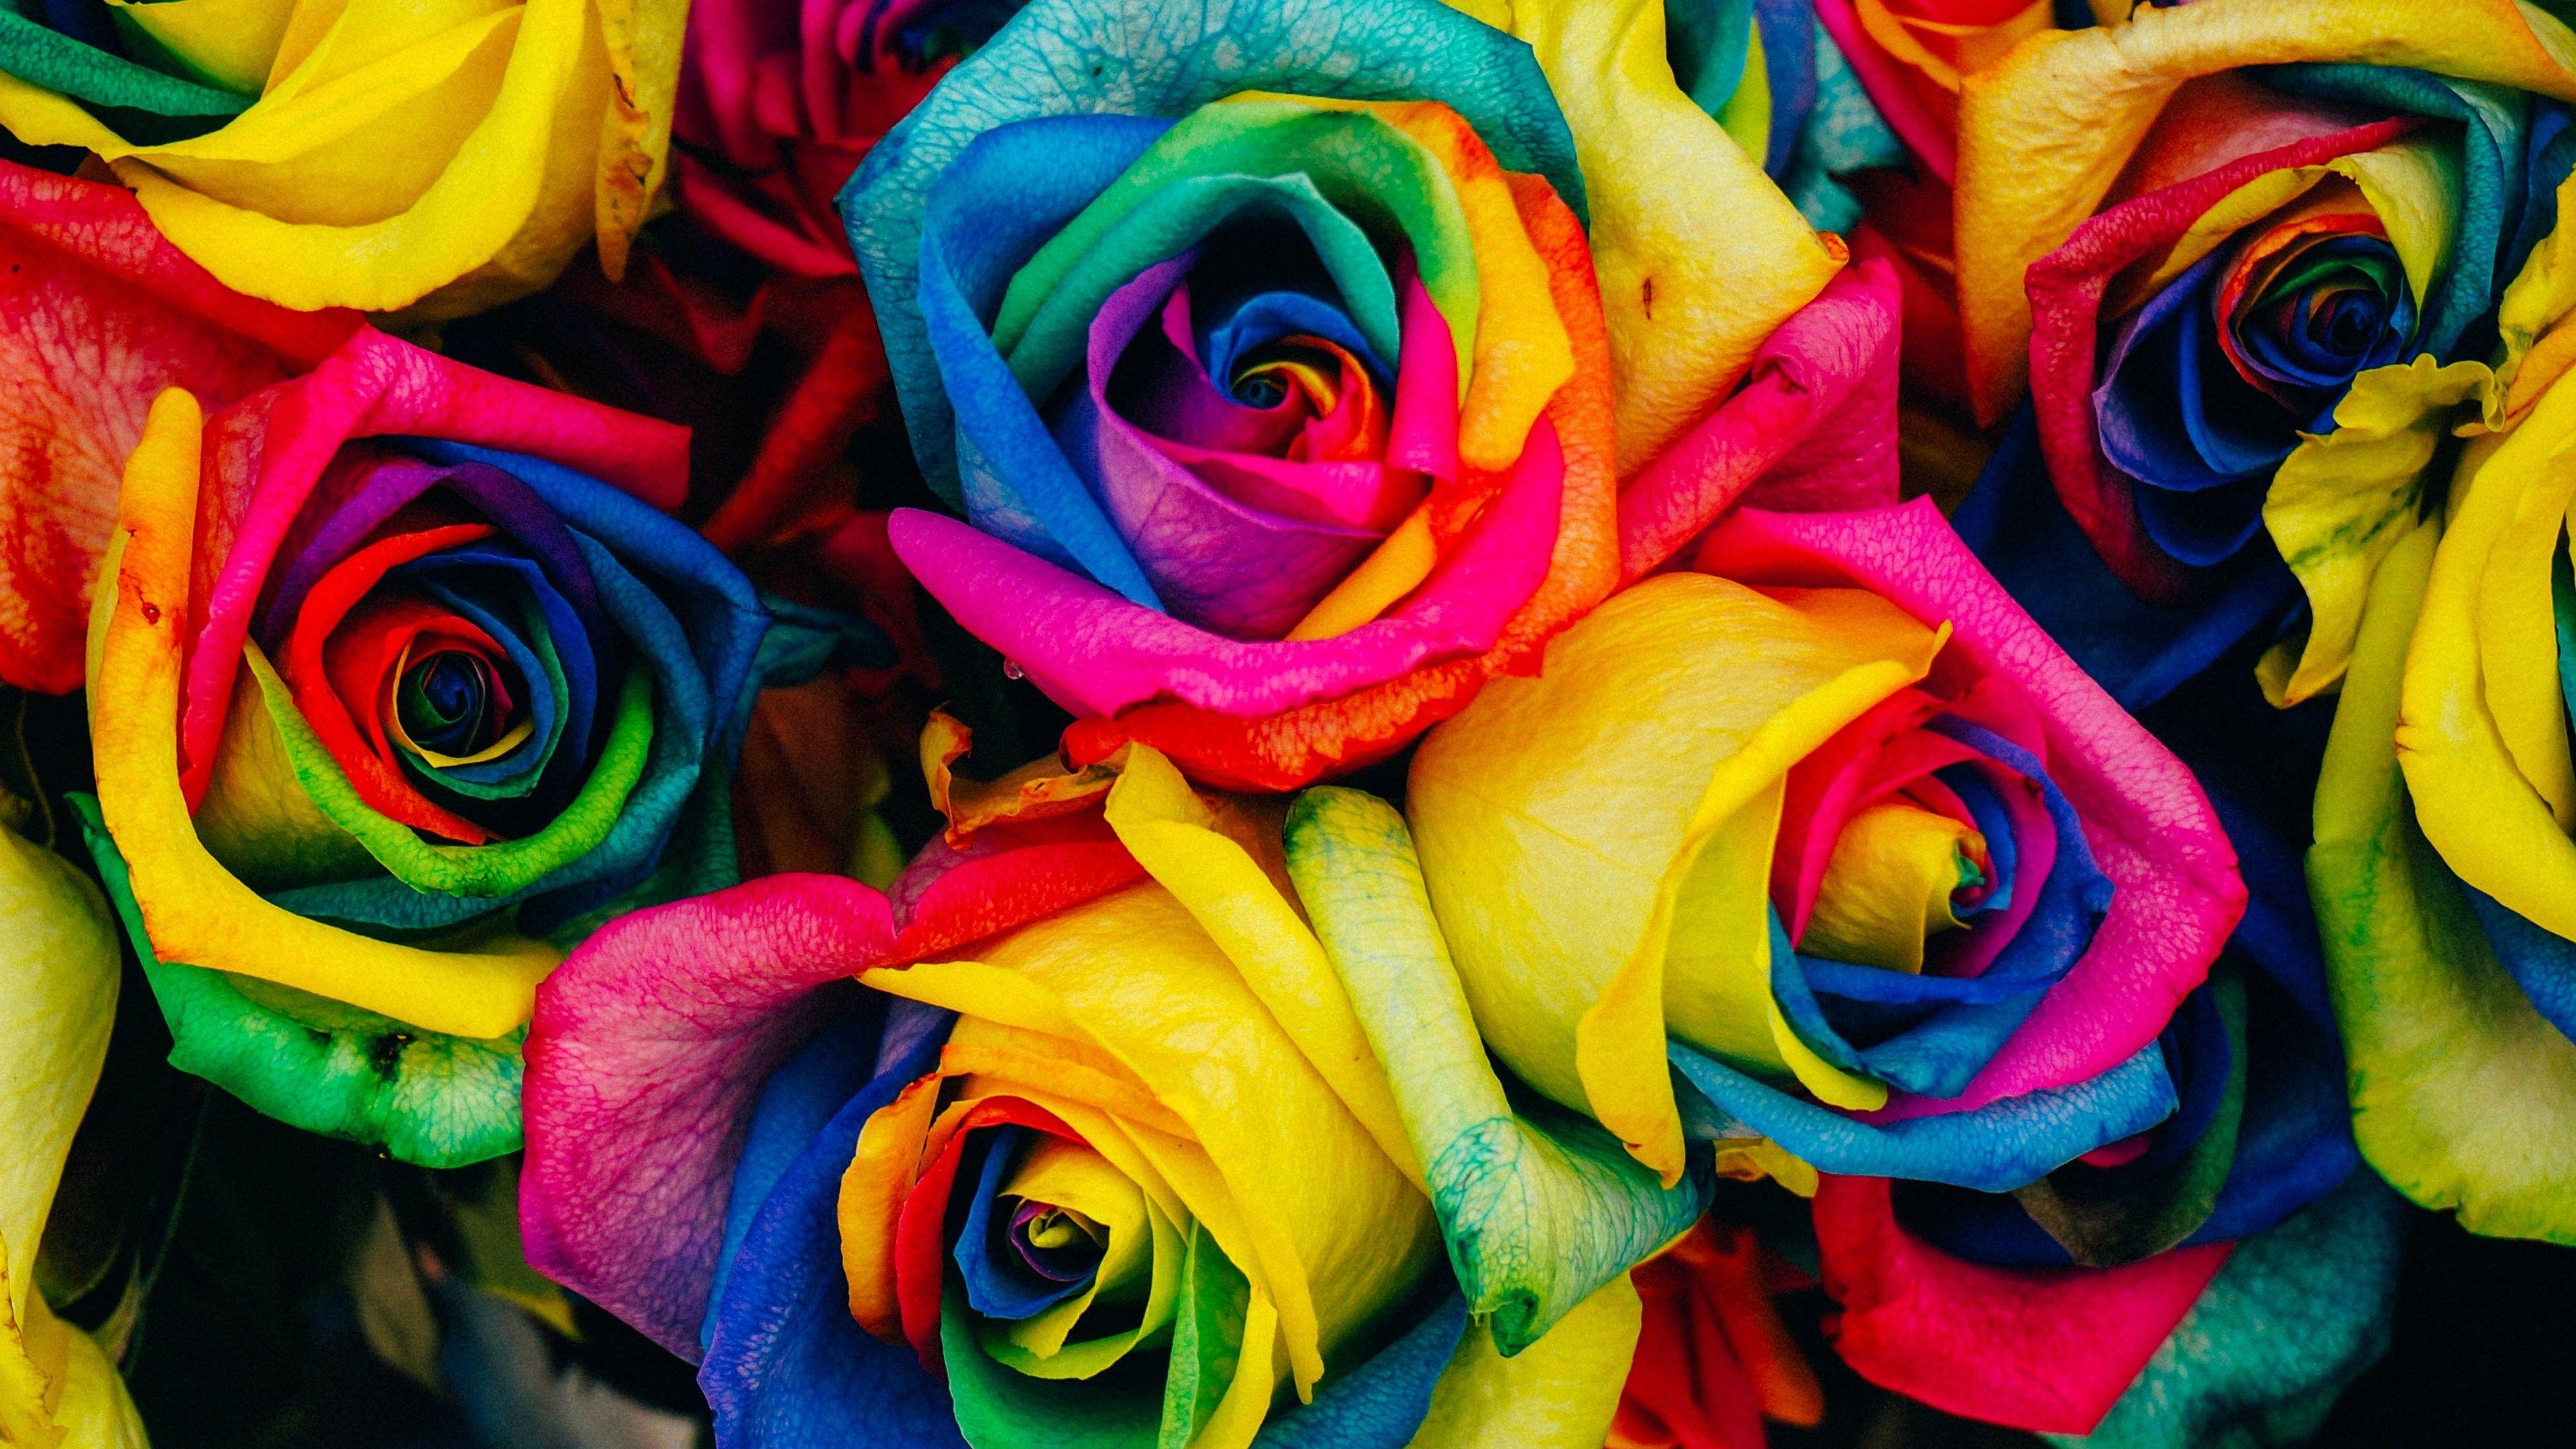 Neon rainbow roses wallpaper by Karresse6988  Download on ZEDGE  5719